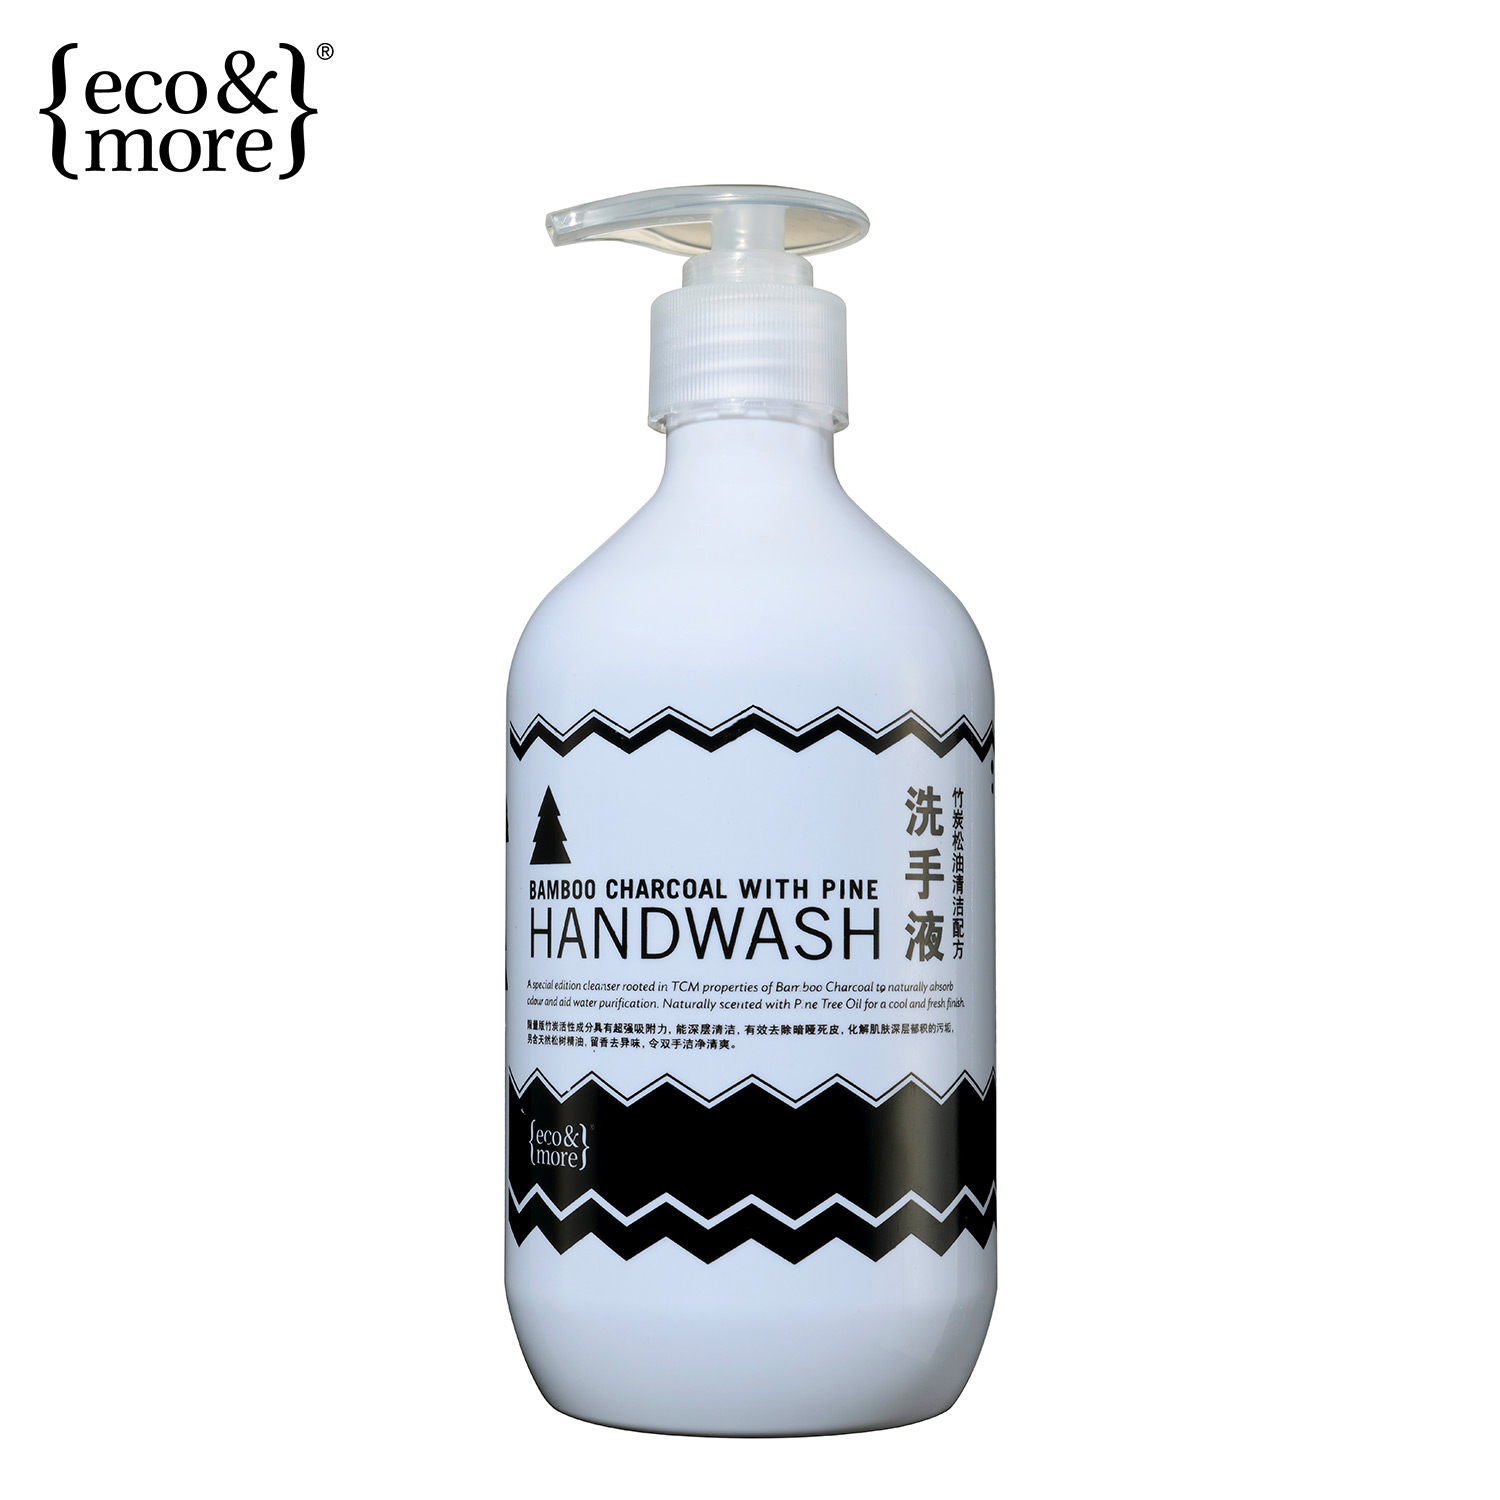 ecomore 竹炭松油强力吸附安全环保洗手液 500ml 天然植物配方